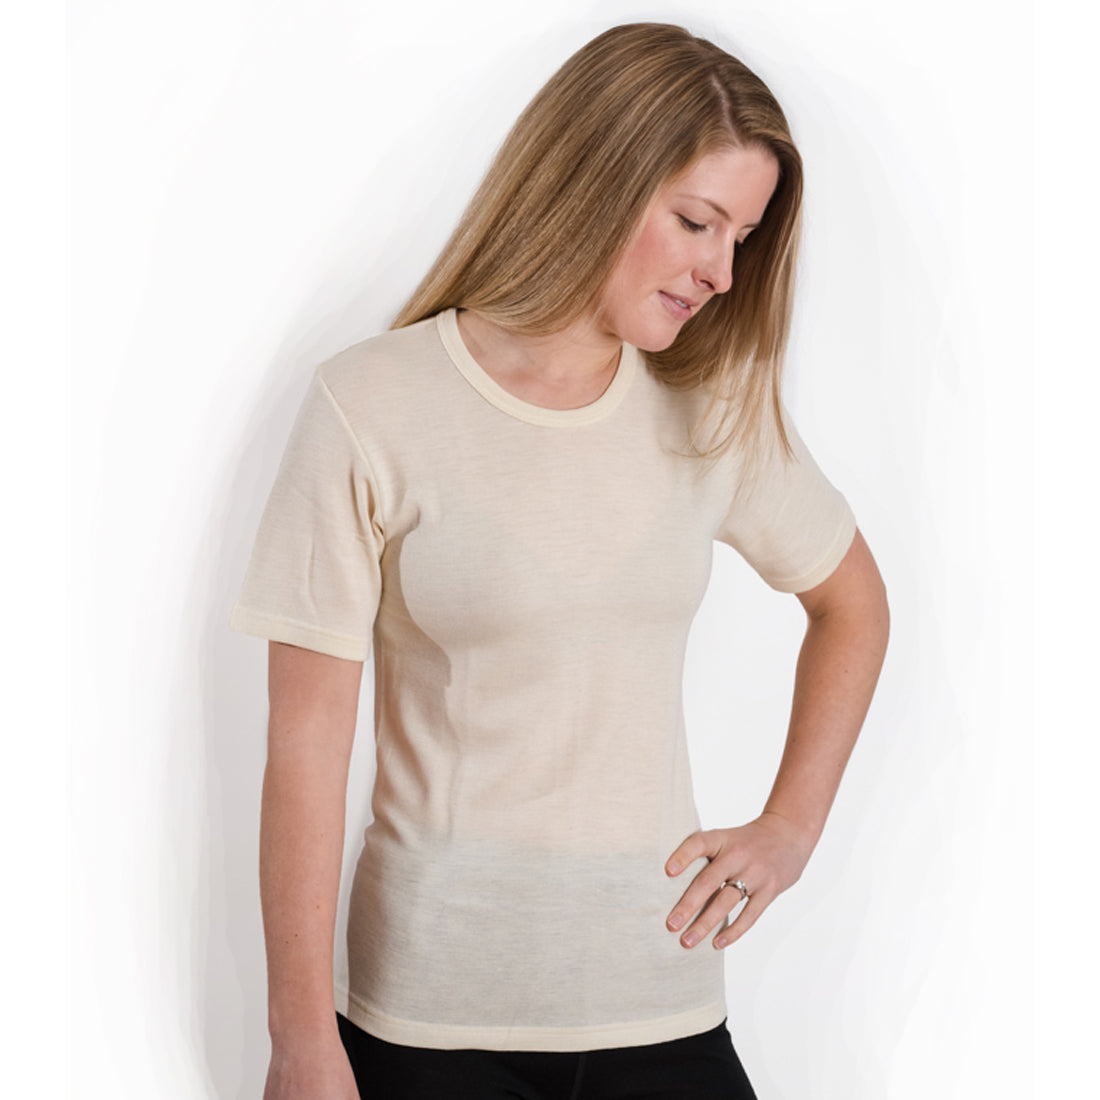 HOCOSA Sport Organic Merino Wool Long-Sleeve Undershirt for Men or Women,  Round-neck, in Natural White